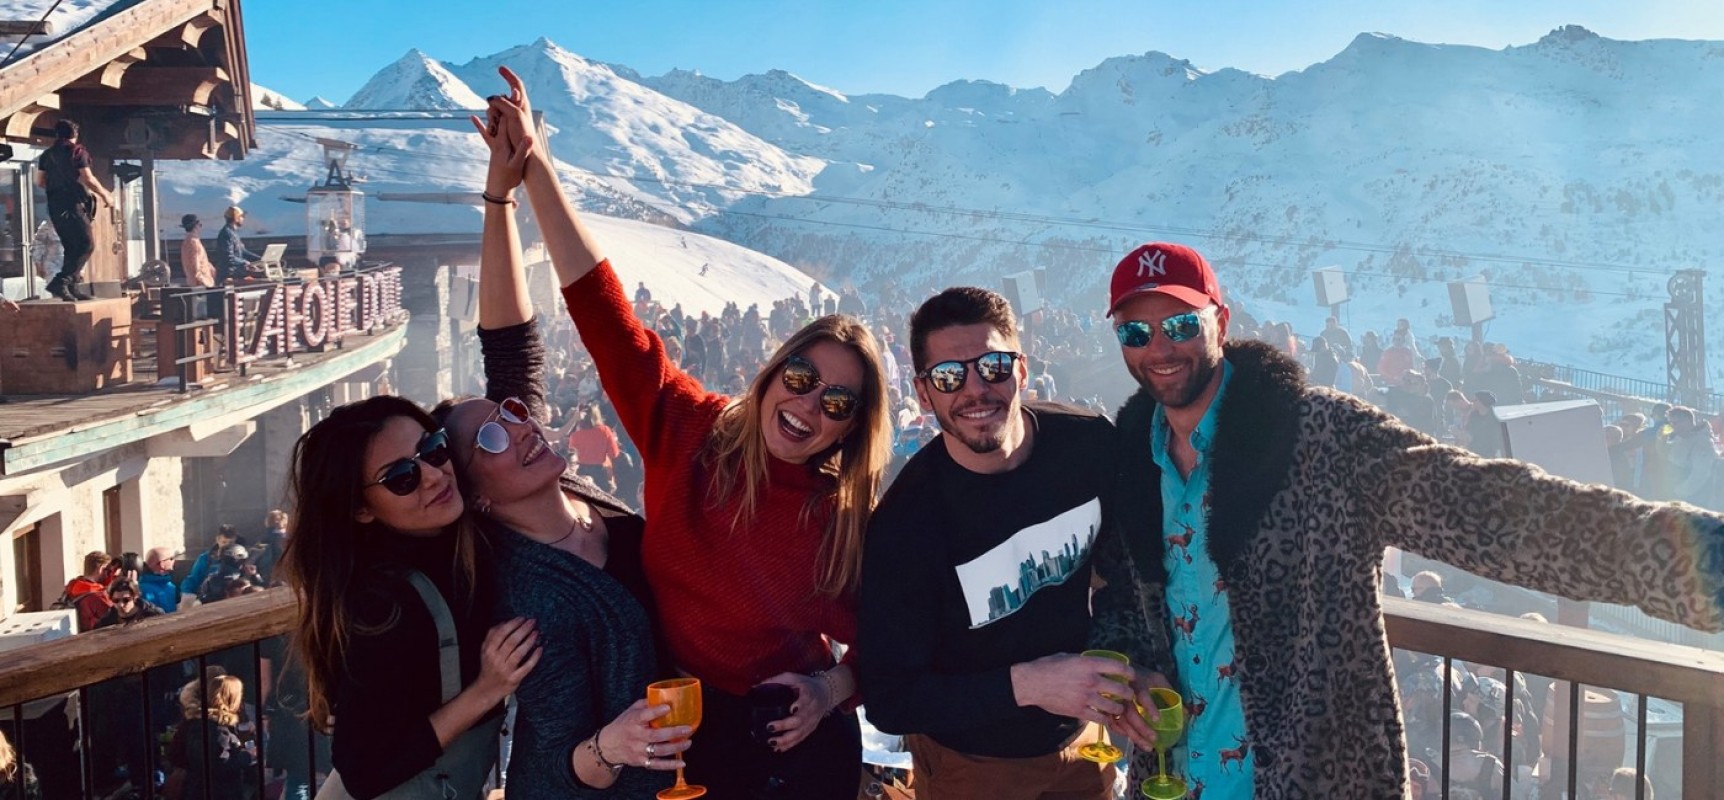 The Best Apres Ski Drinks In Europe - Folie Douce